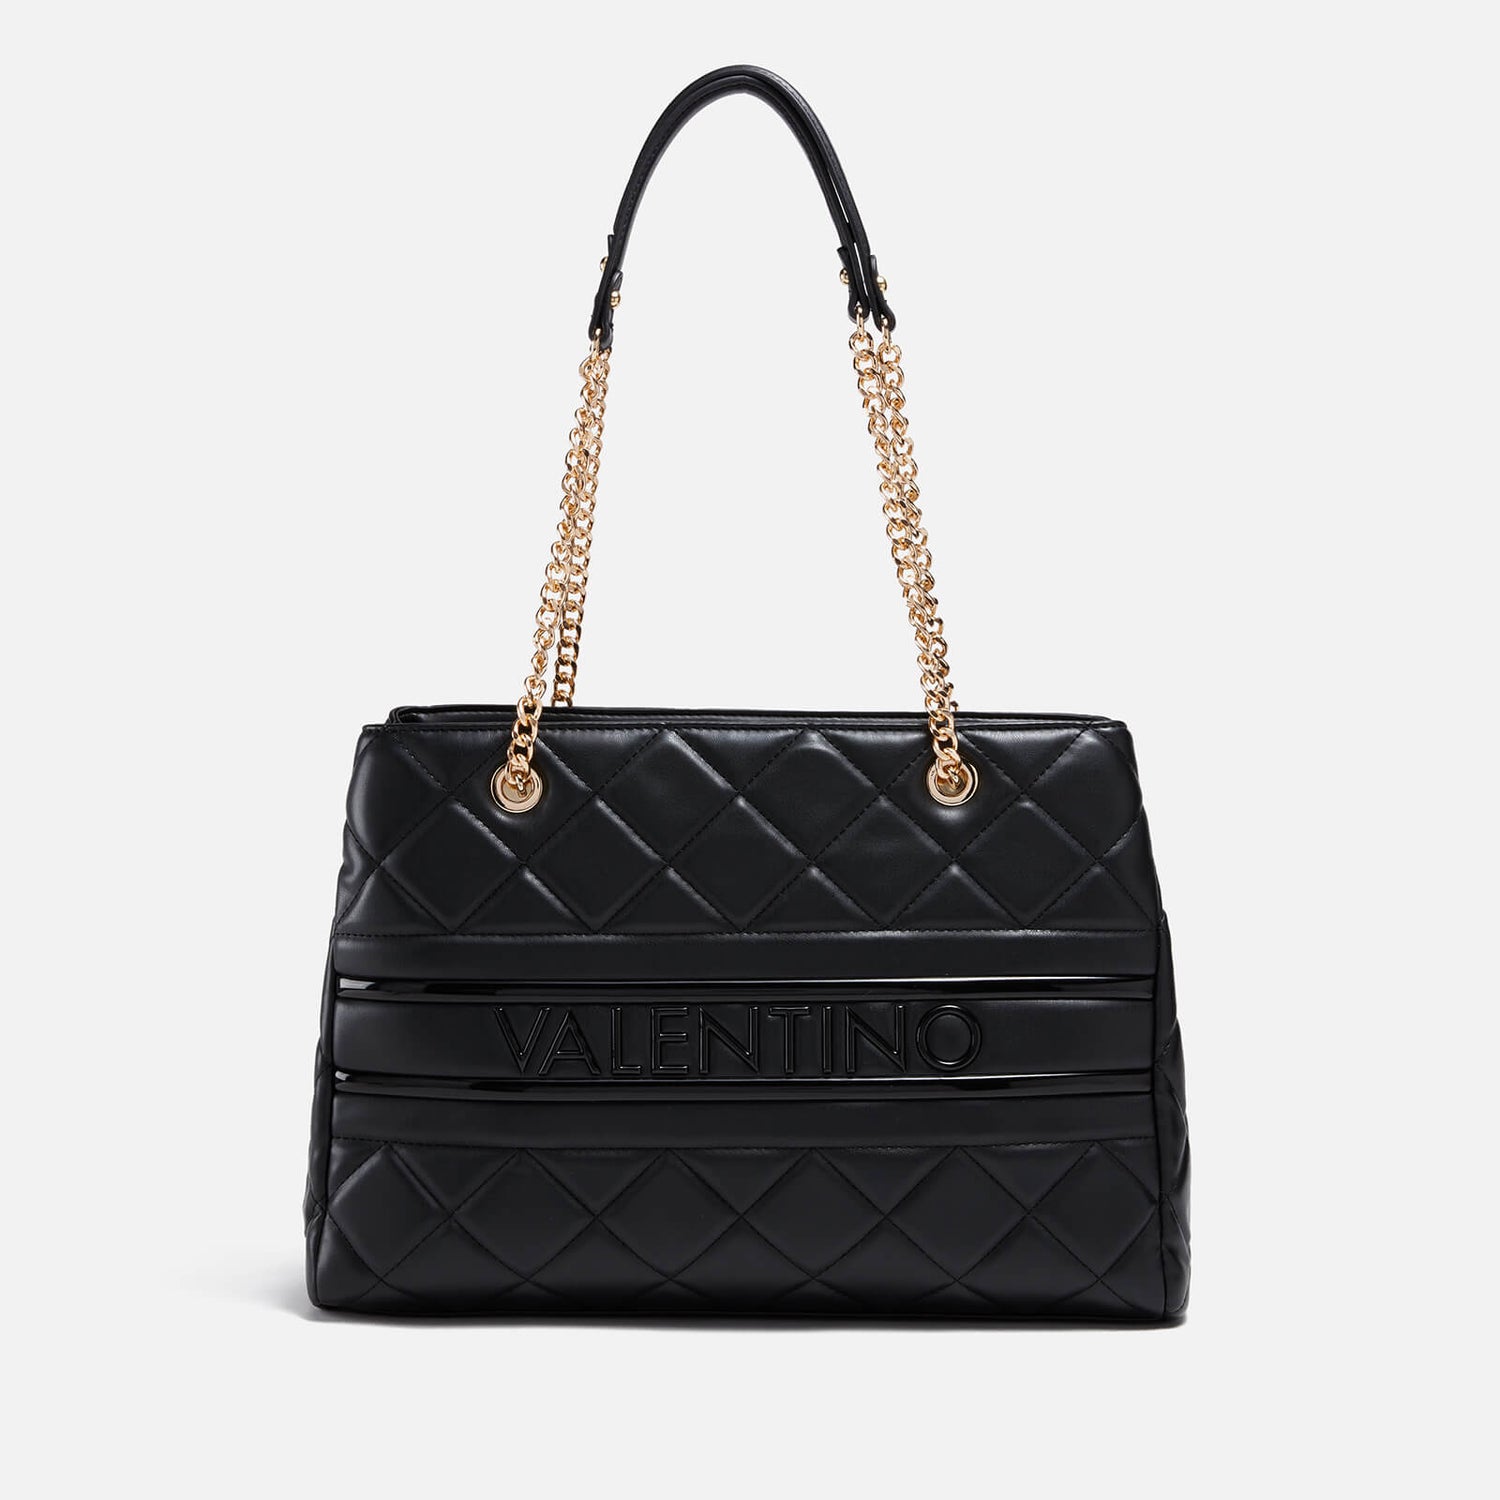 Valentino Women's Ada Shoulder Bag - Black